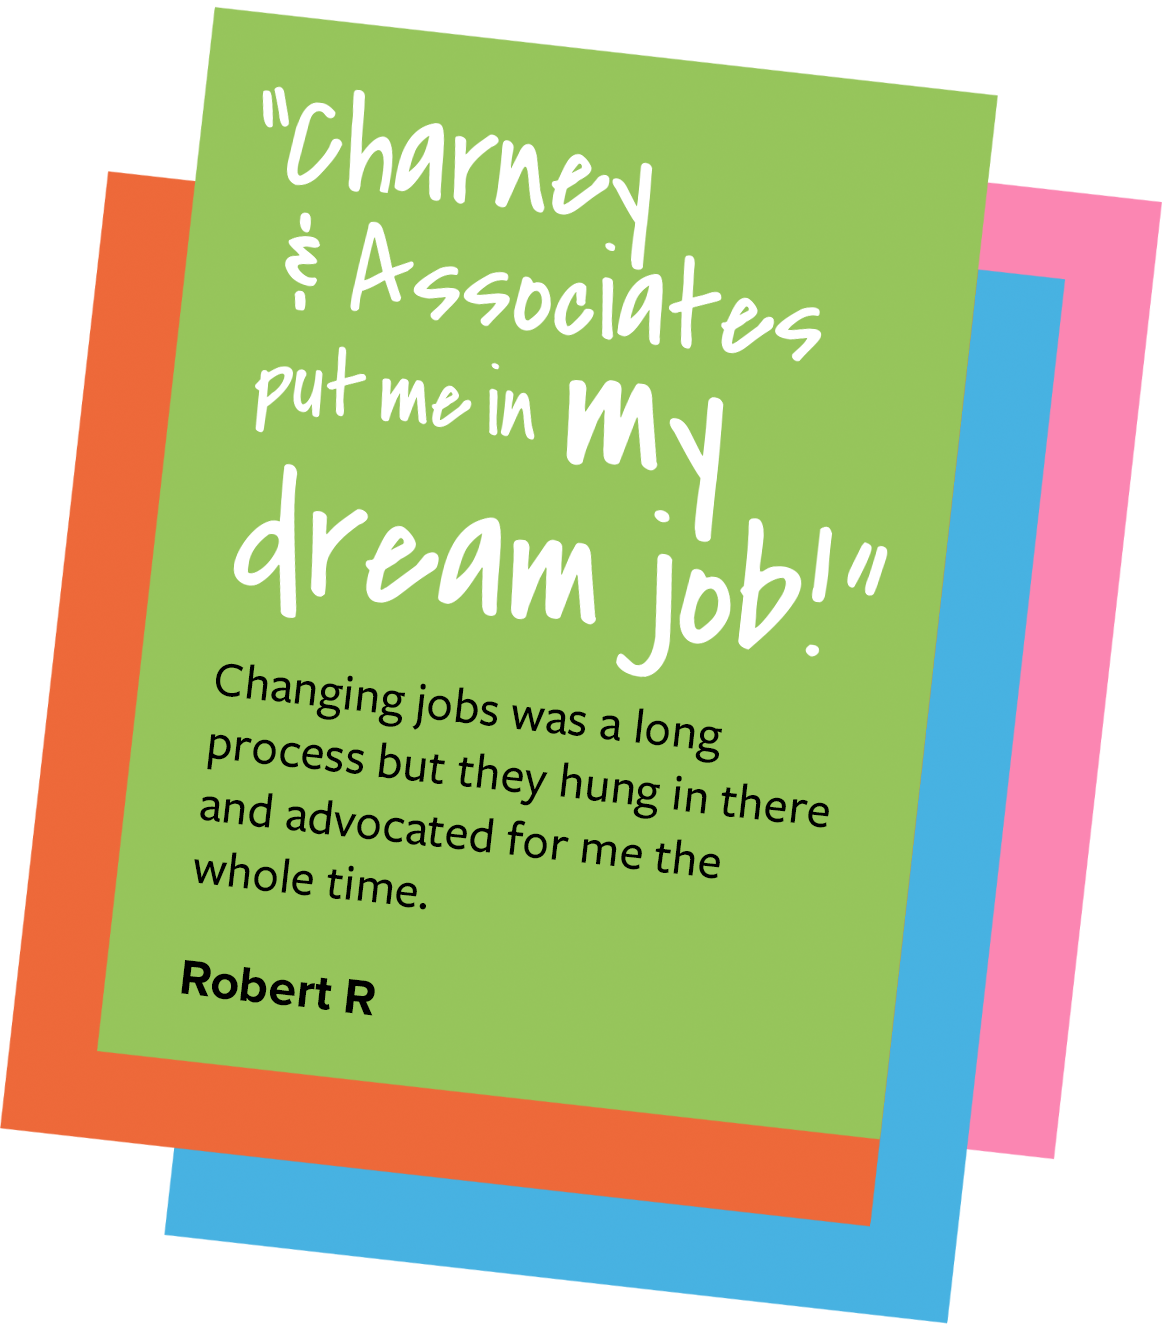 Charney & Associates put me in my dream job!